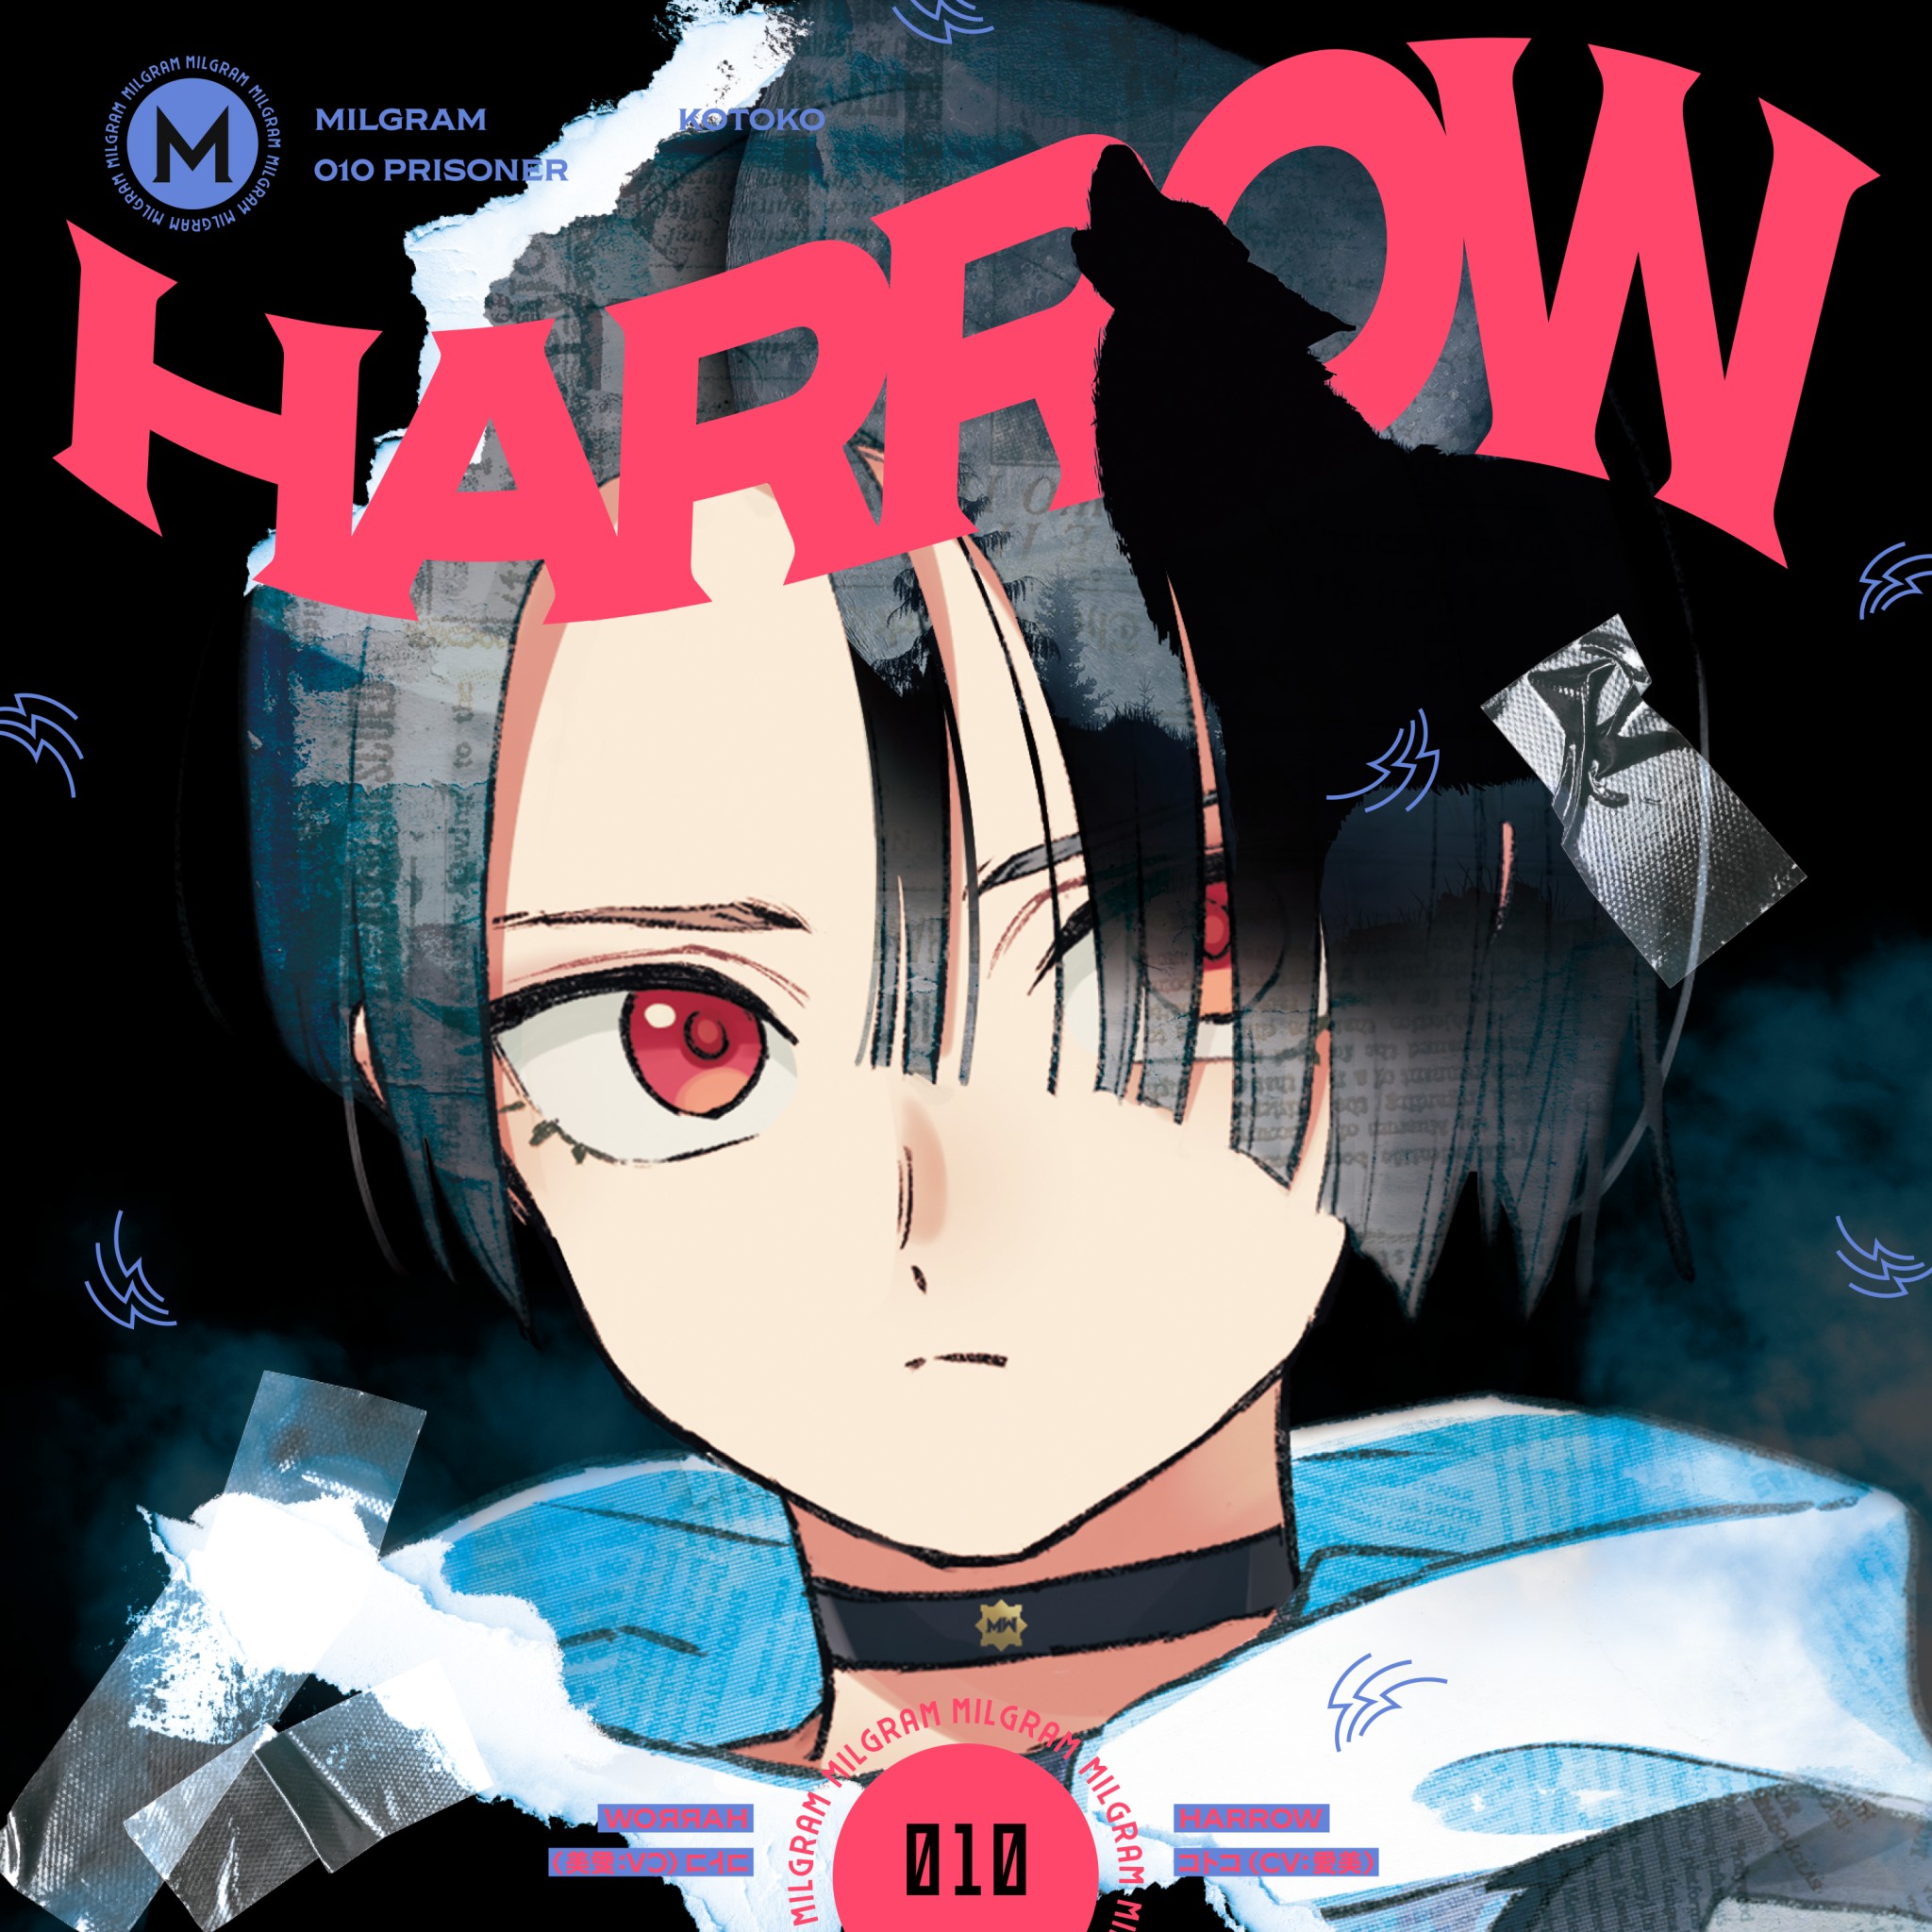 Aimi [JP] — HARROW cover artwork